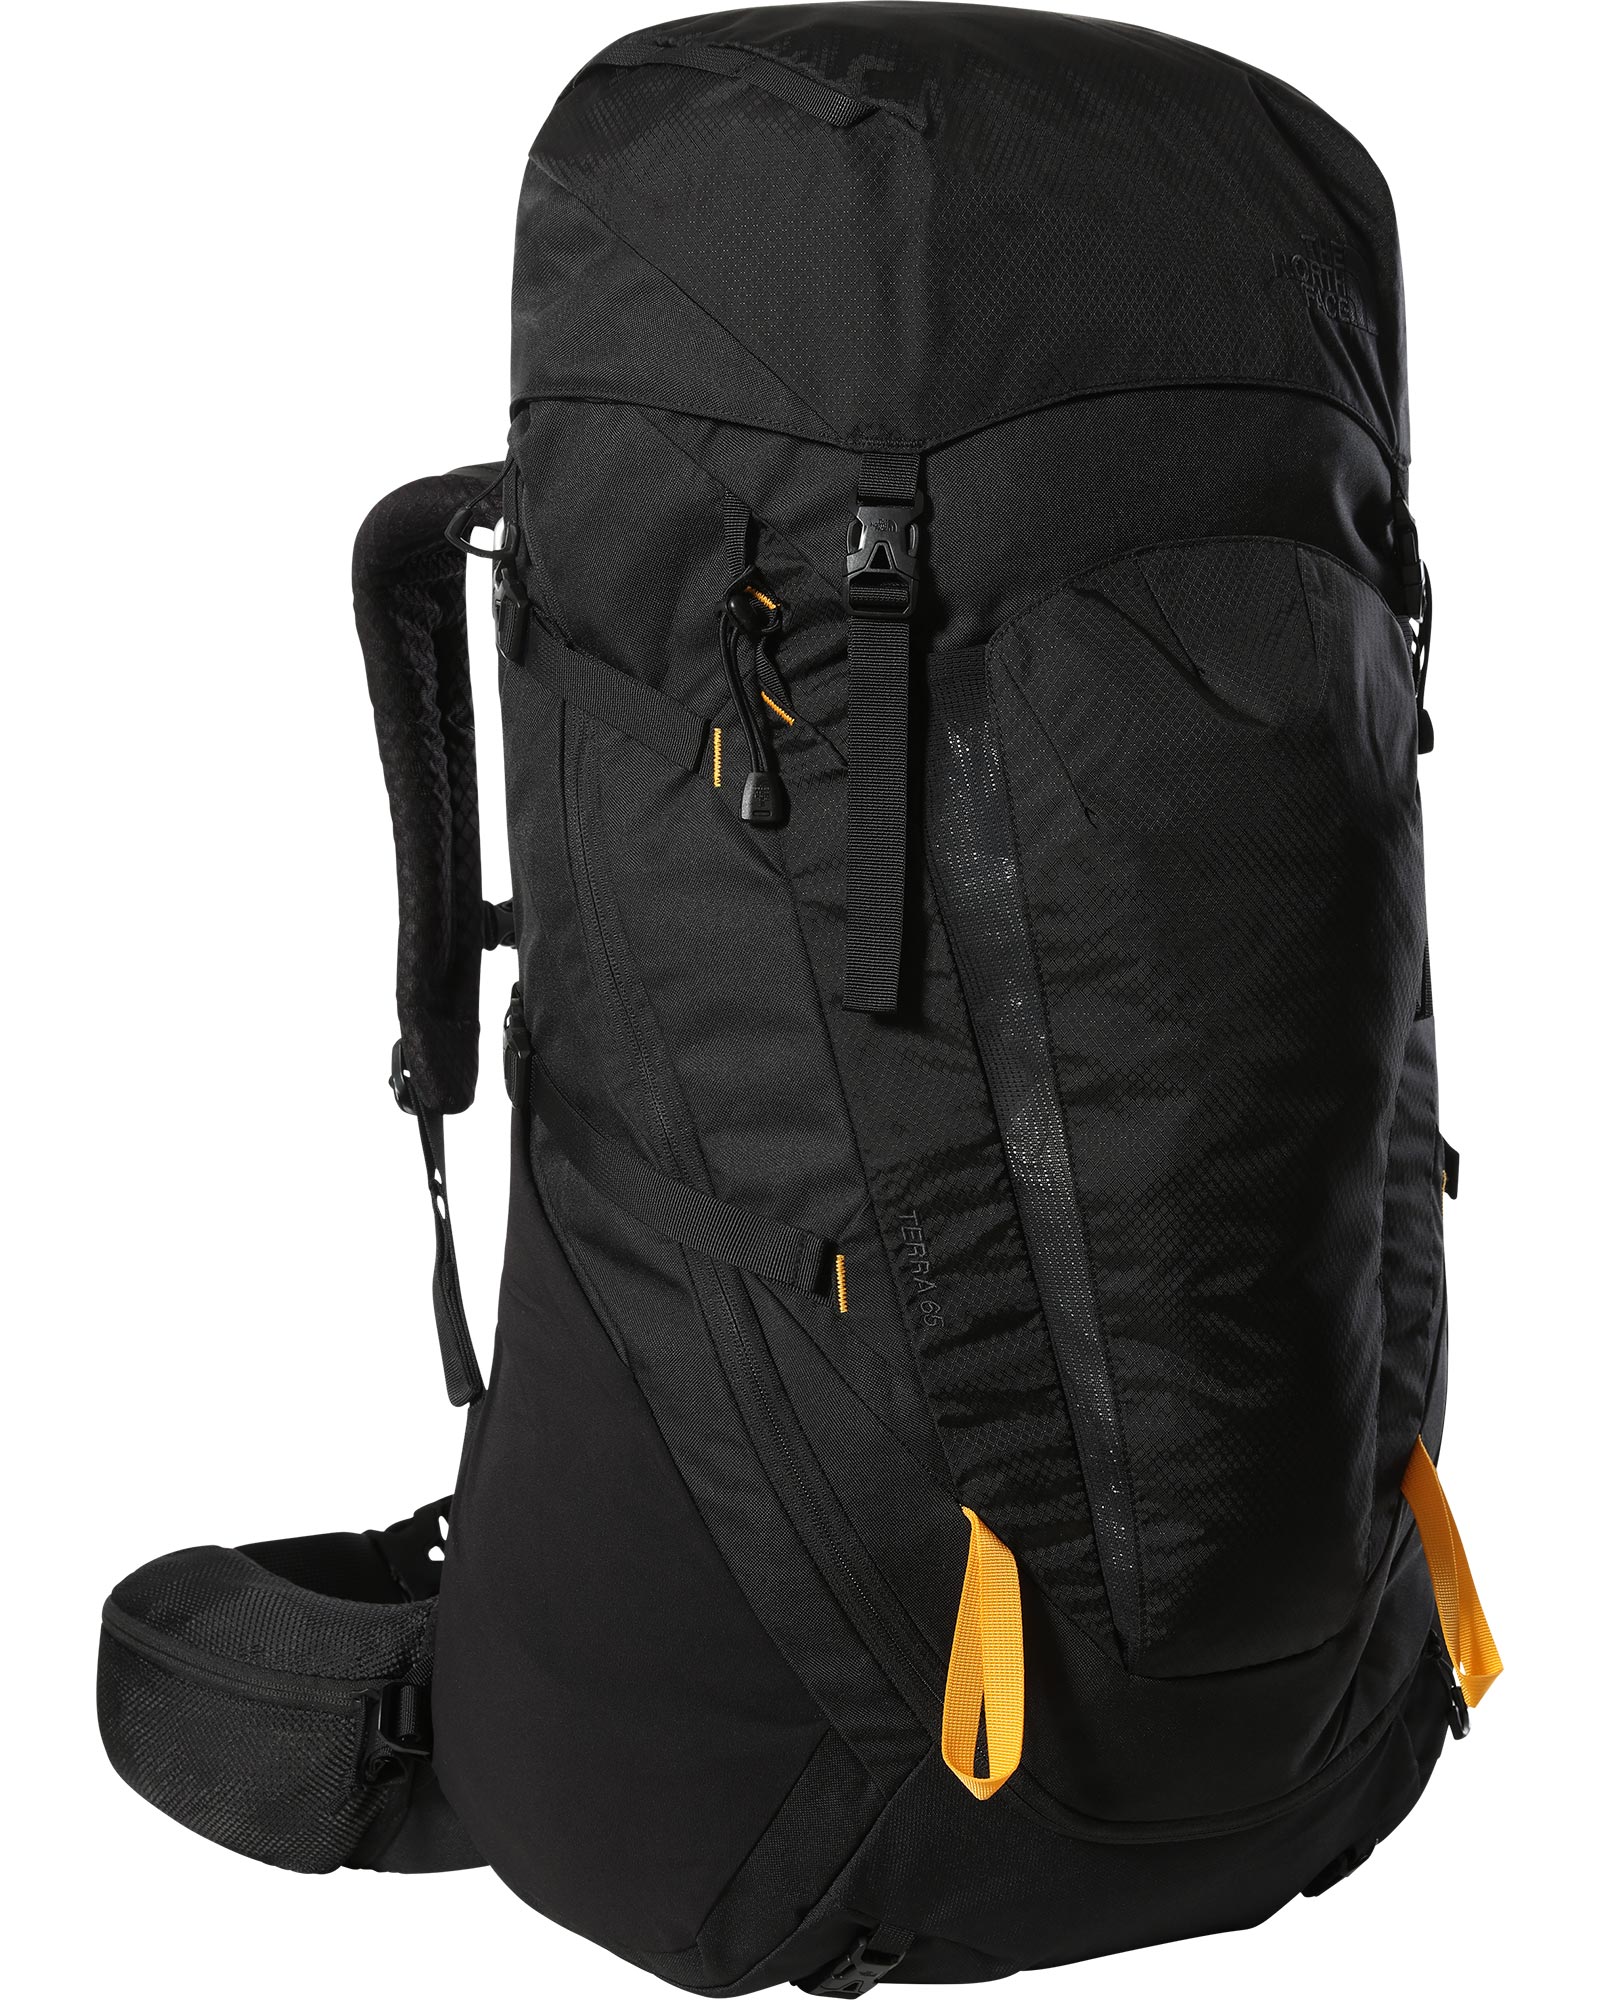 The North Face Terra 65 Backpack - TNF Black/TNF Black S/M